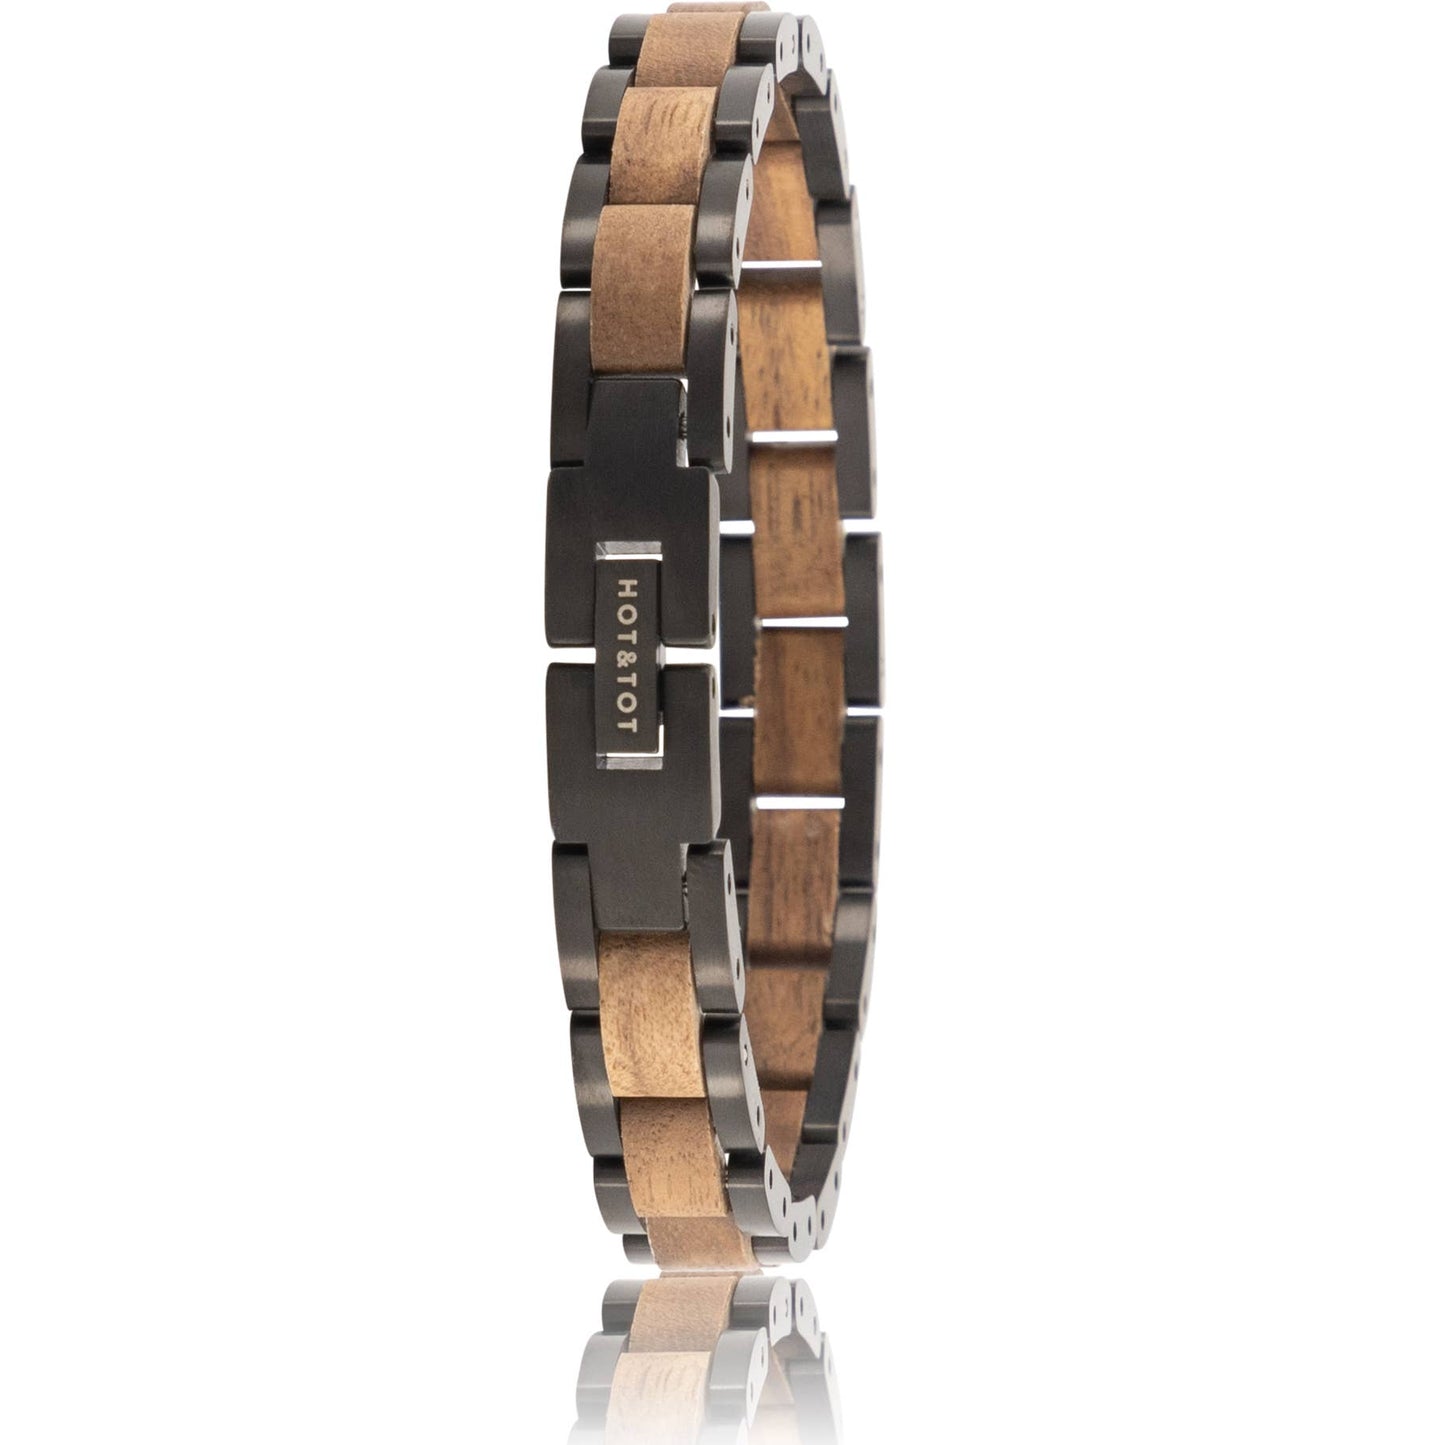 COBRA | Men's bracelet | Walnu wood | Black | Sustainable